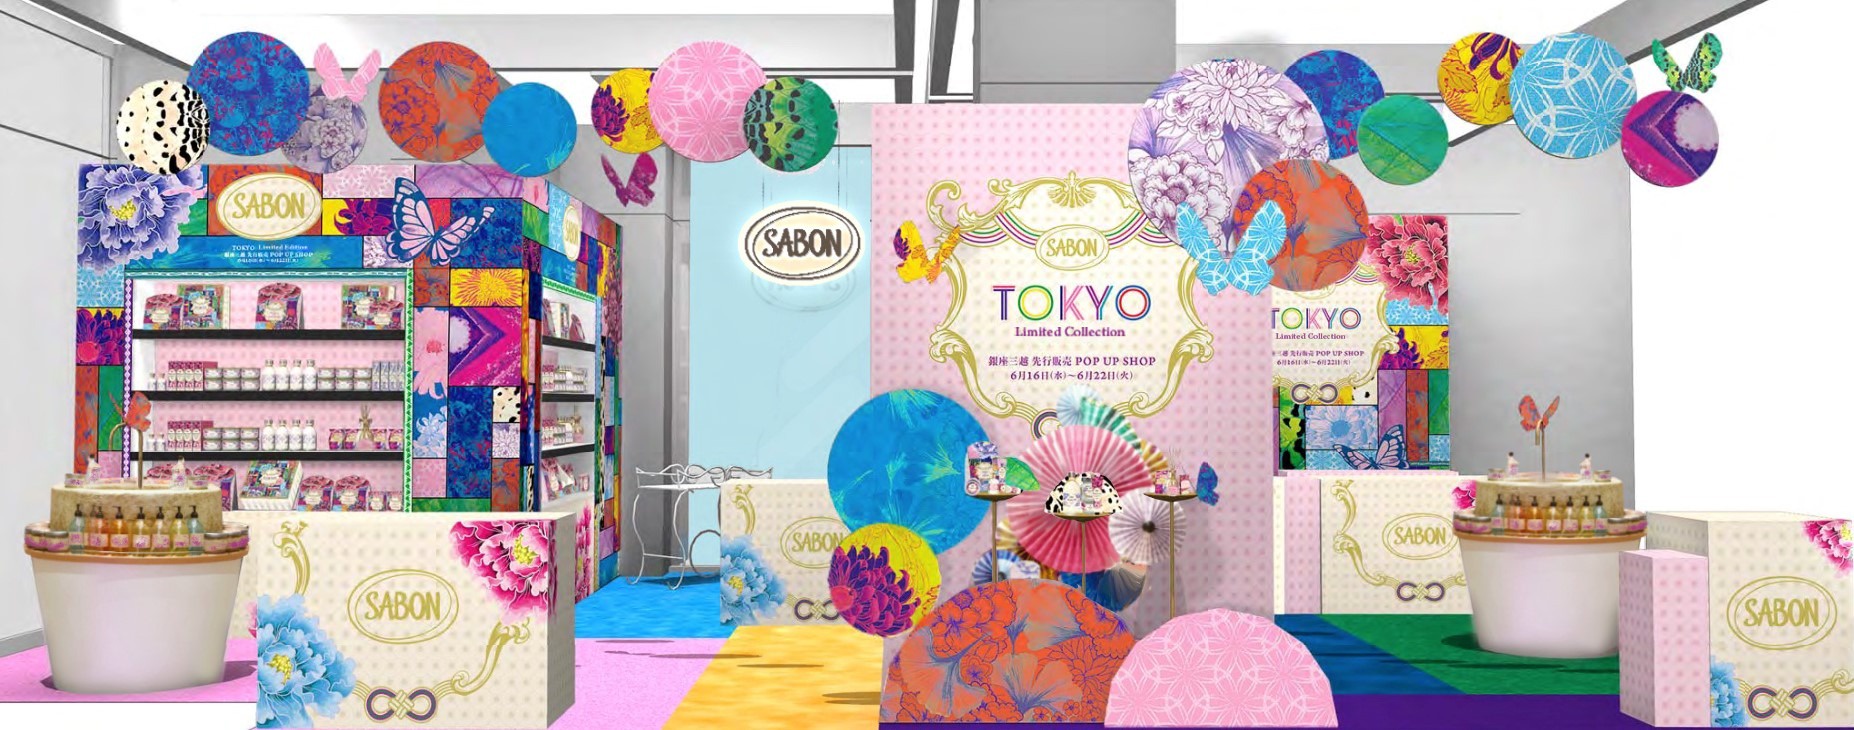 Sabon サボン Tokyo Limited Collection 銀座三越 先行販売 Pop Up Shop開催 美容 化粧品情報はアットコスメ